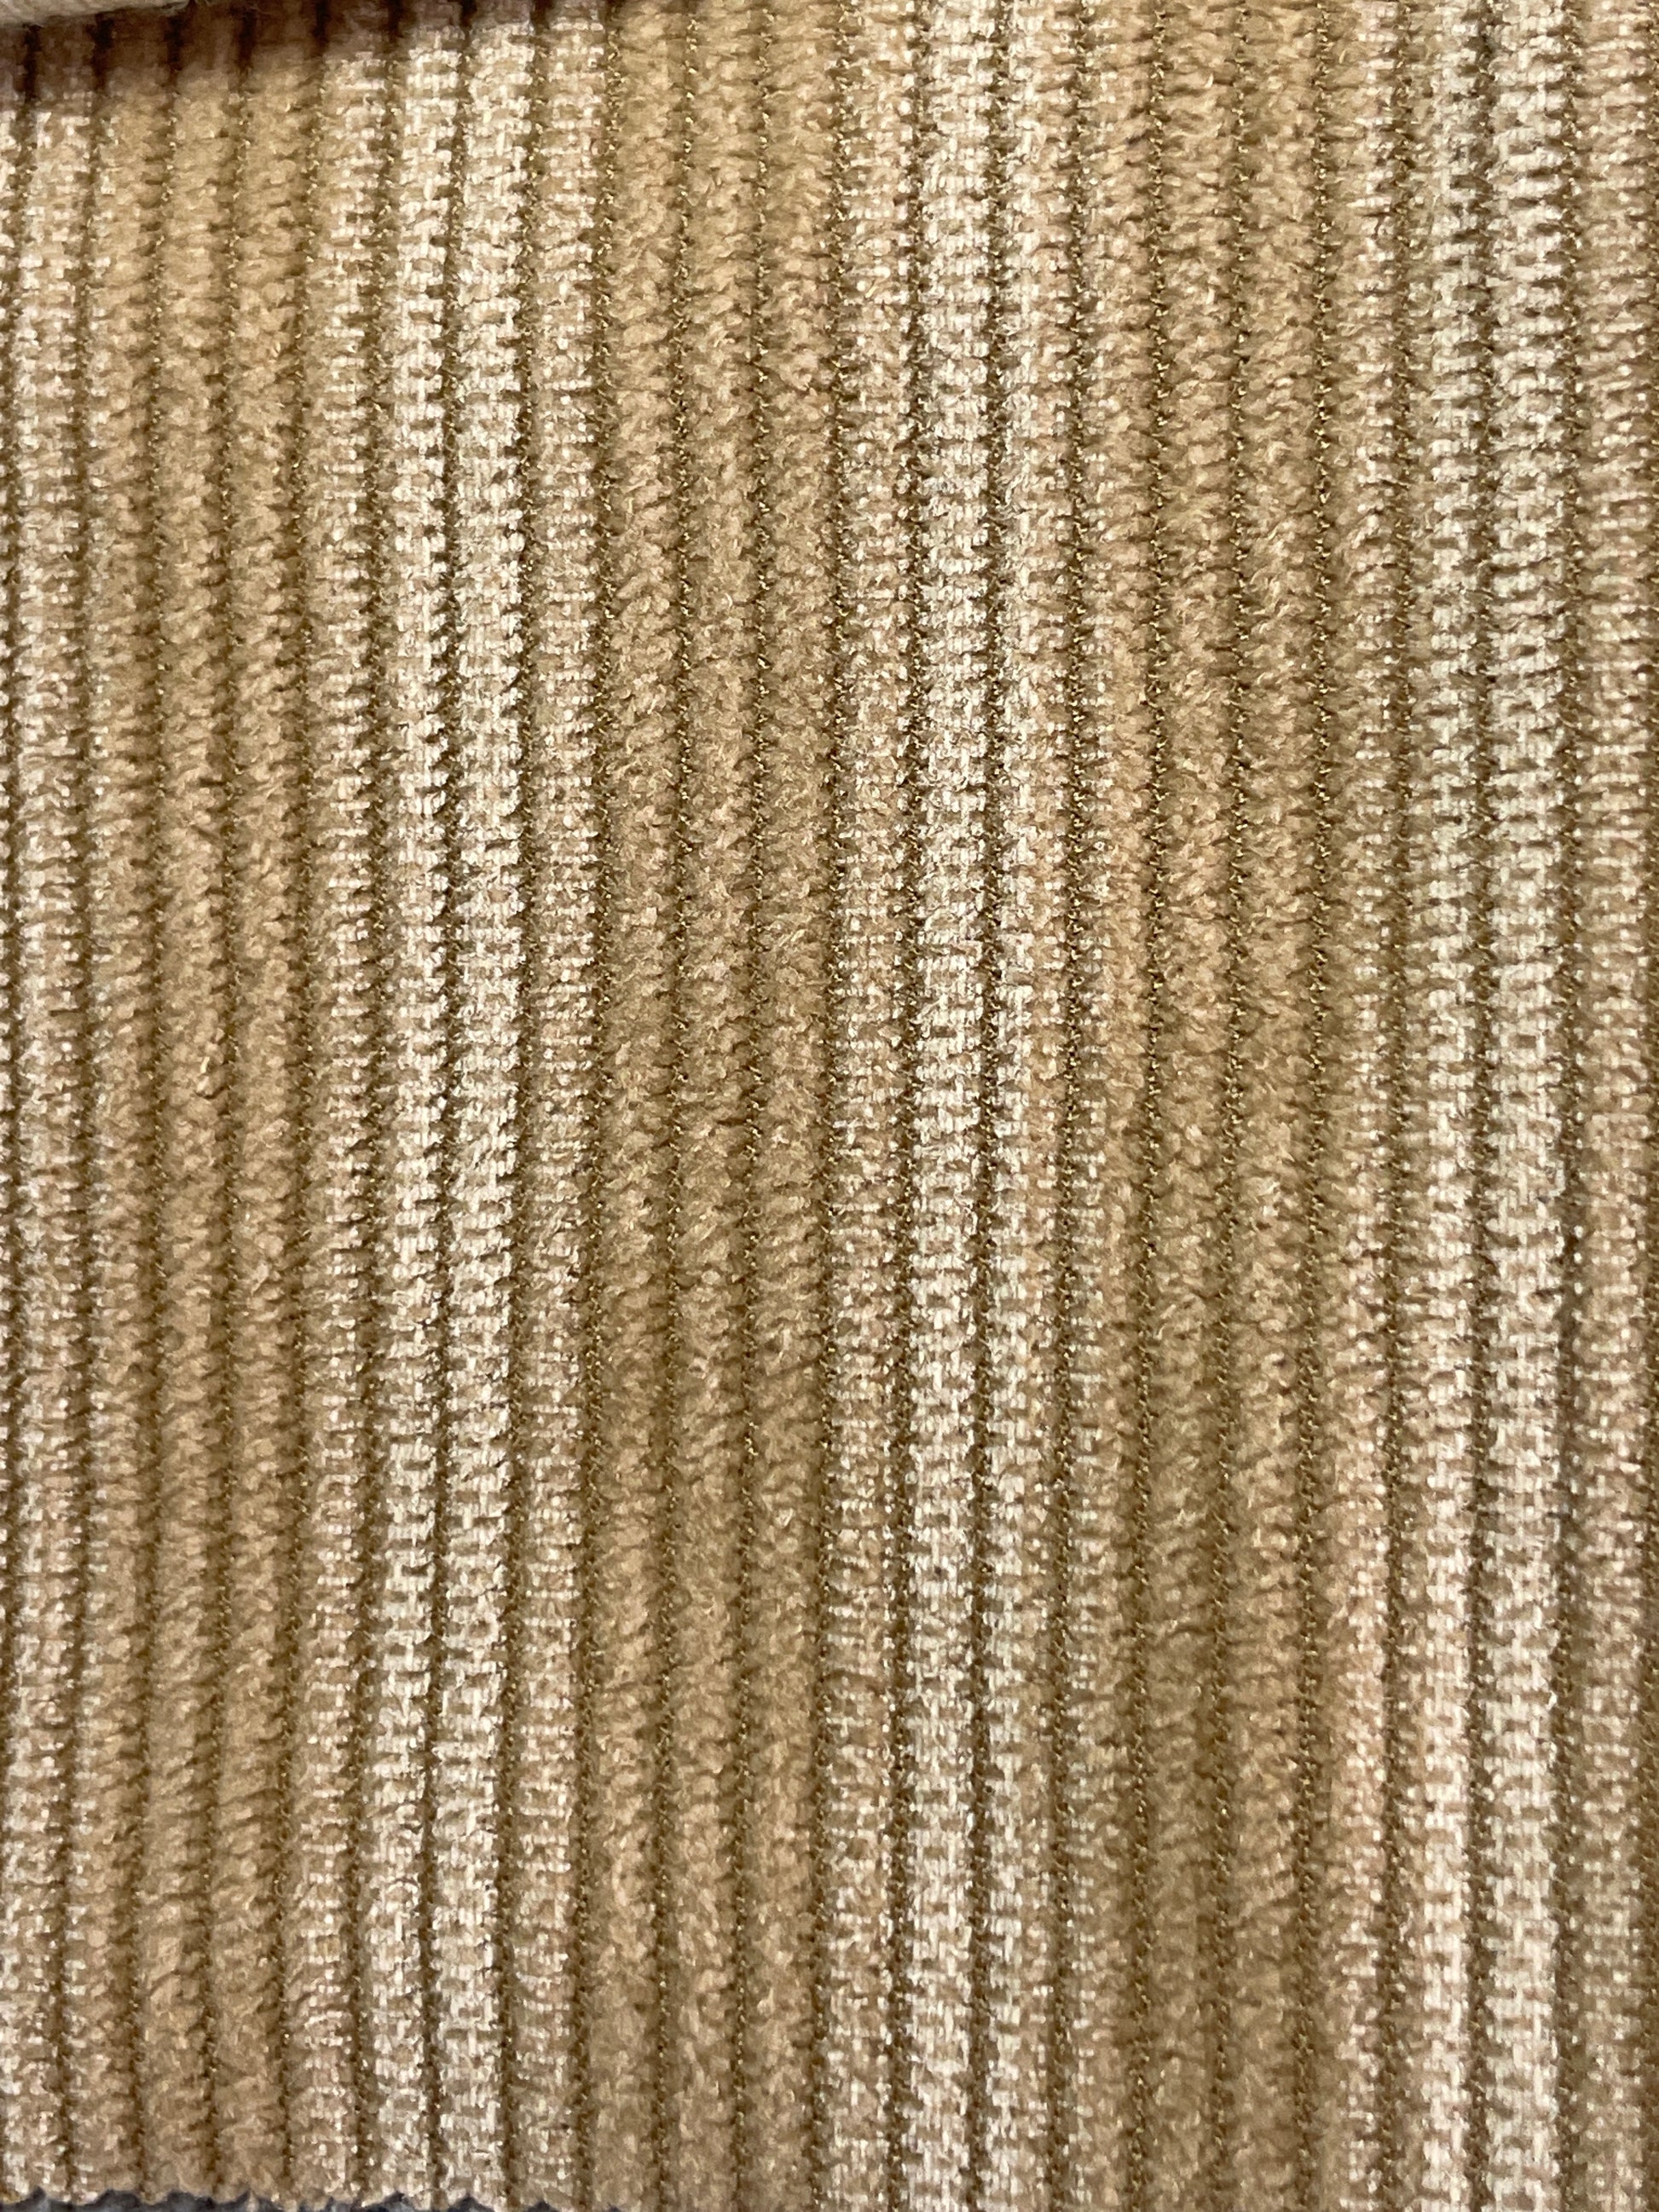 100% Polyester Woven Corduroy Fabric--Stripes Print - Natasha Fabric